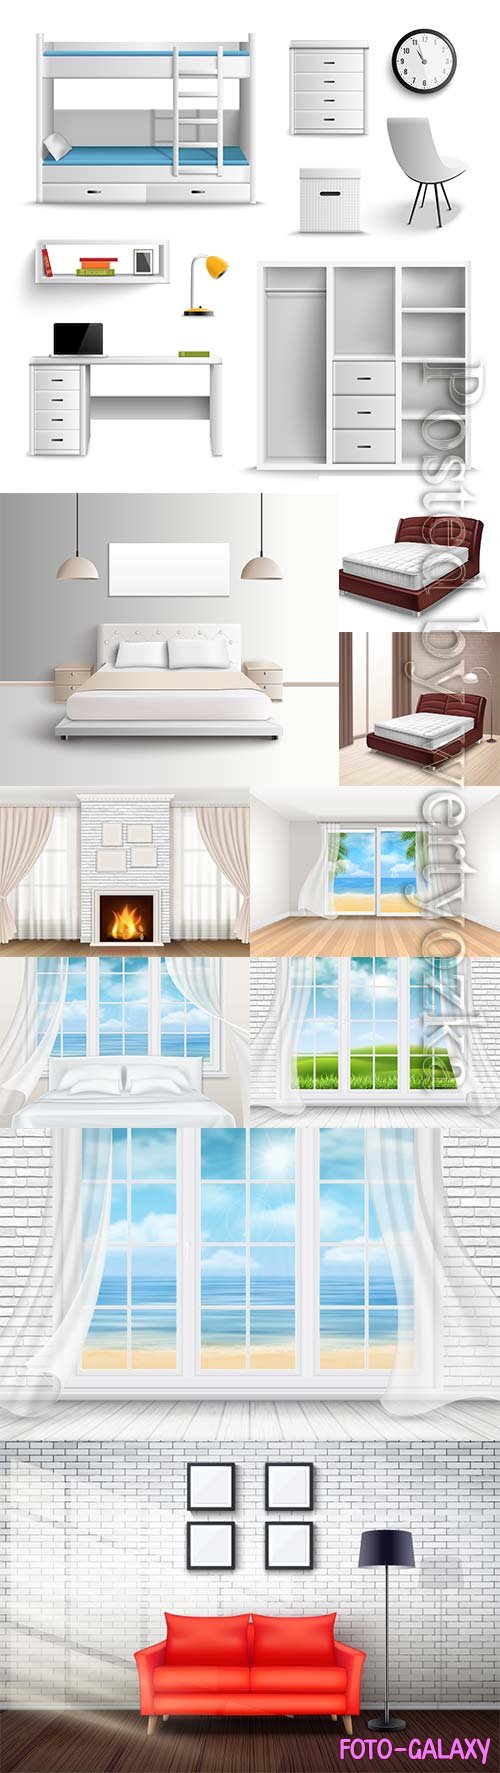 Interior of rooms, windows vector illustration